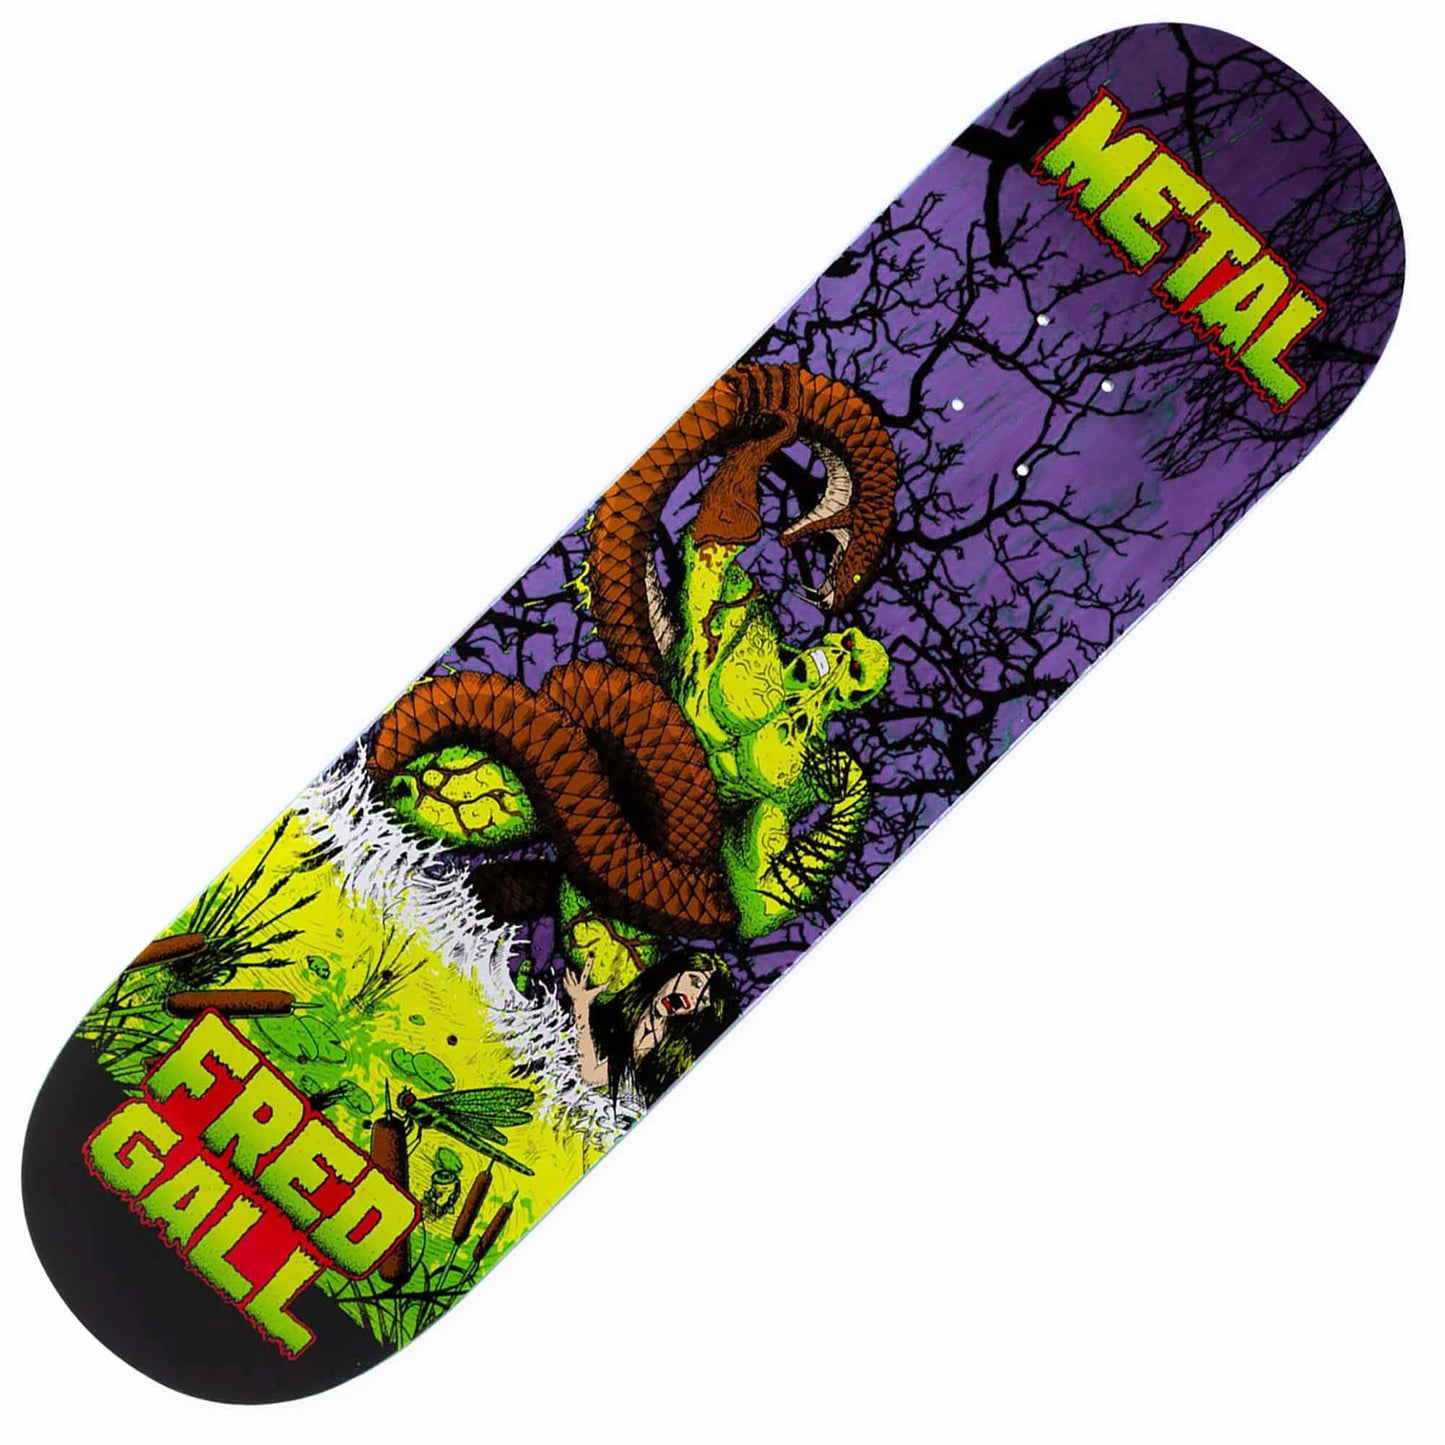 Metal Fred Gall Swamp Thing Deck (8.5") - Tiki Room Skateboards - 1